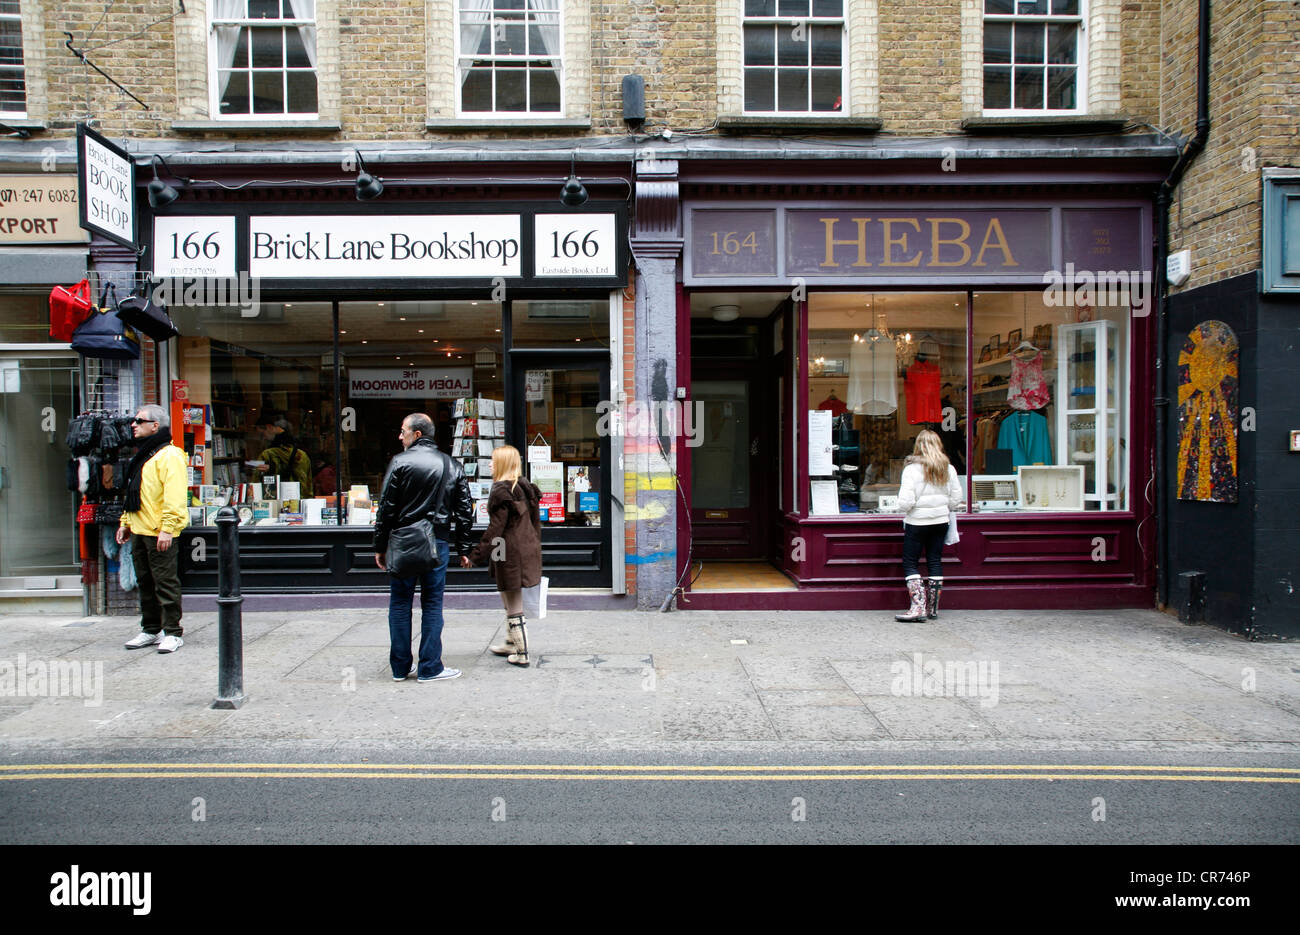 Brick Lane Bookshop and Heba on Brick Lane, Shoreditch, London, UK Stock Photo